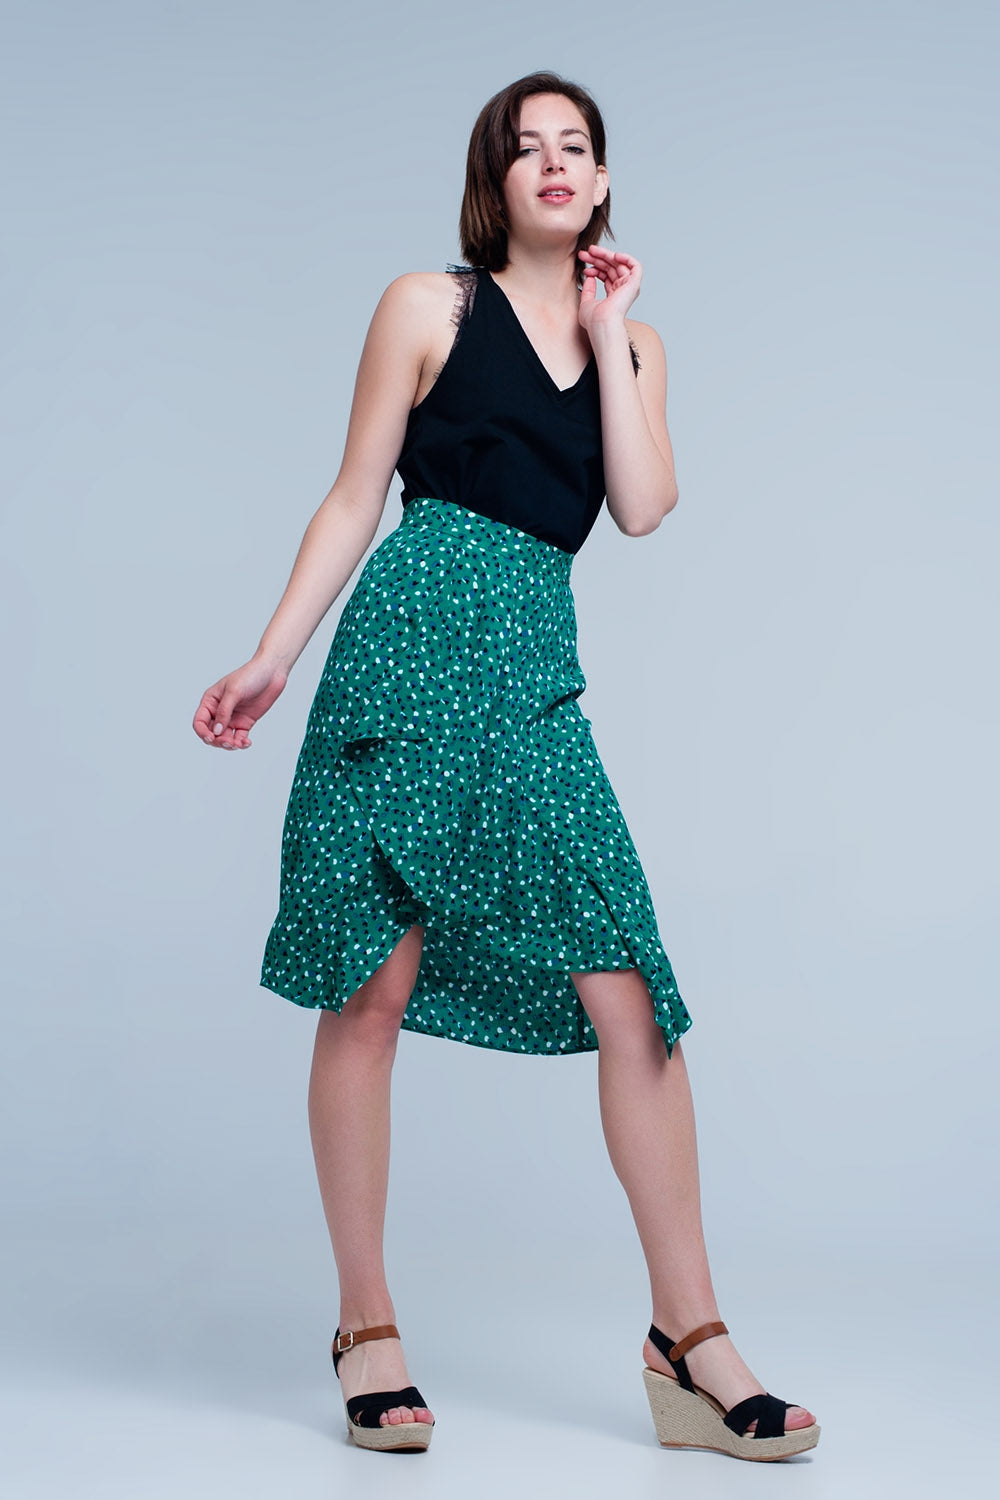 Q2-Green skirt with flower print-Skirts